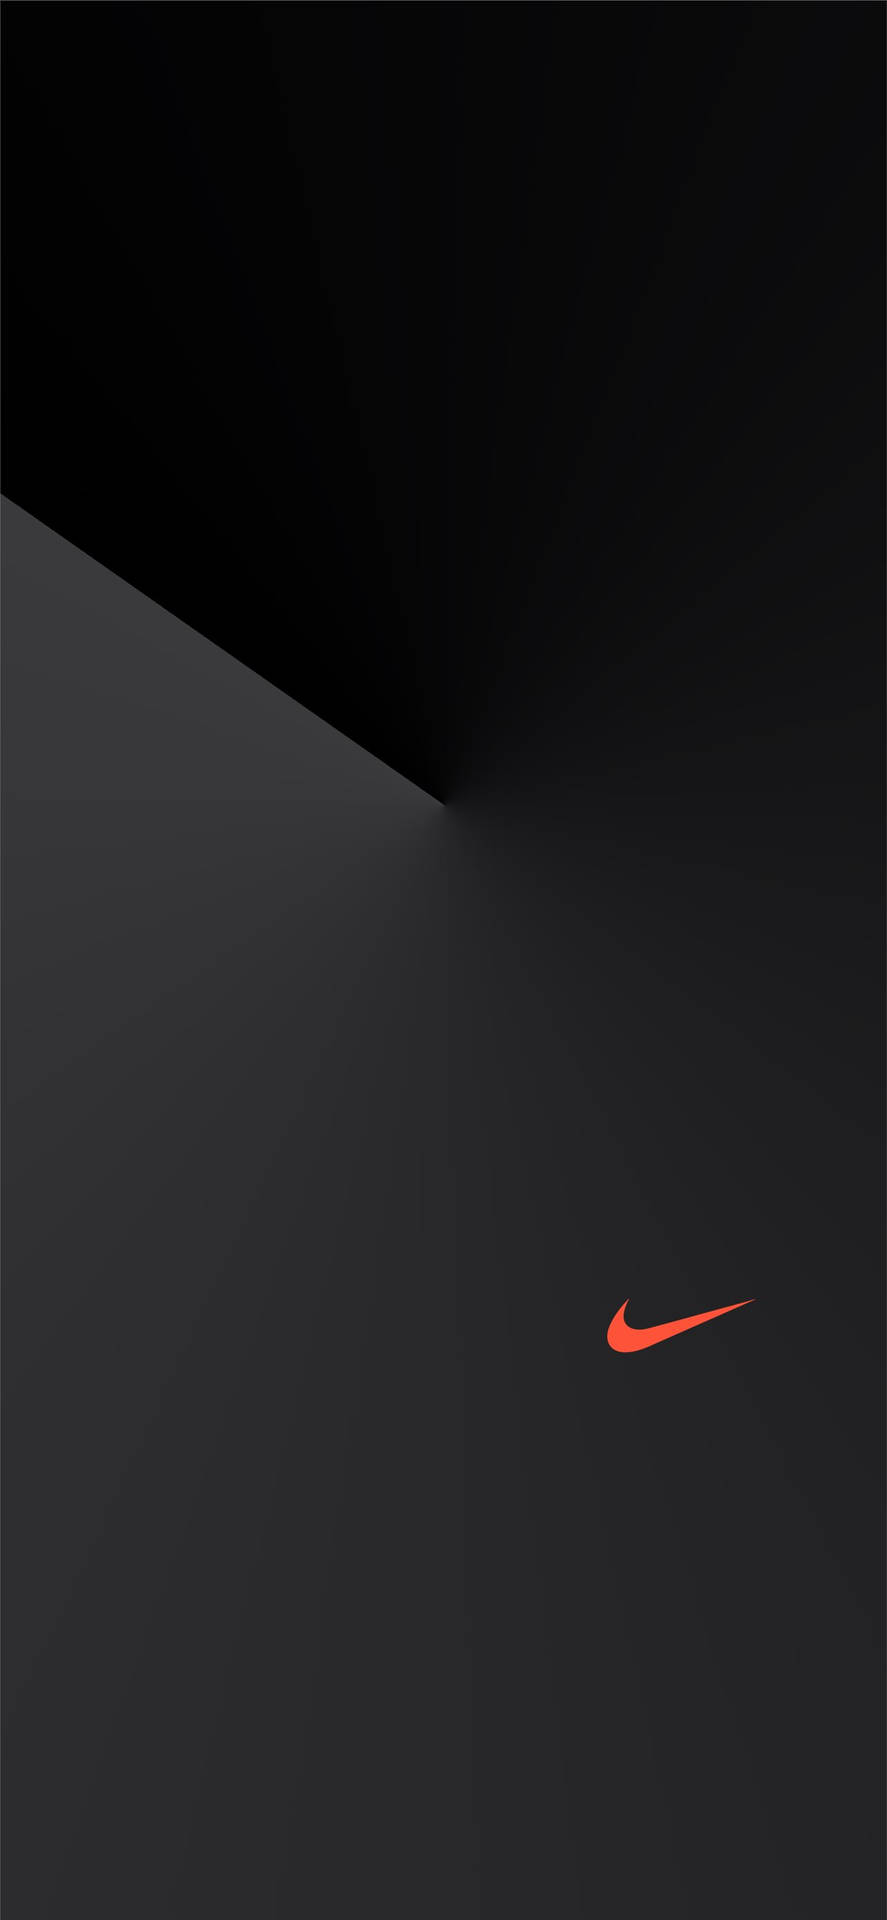 Download Small Nike Iphone Logo Wallpaper 